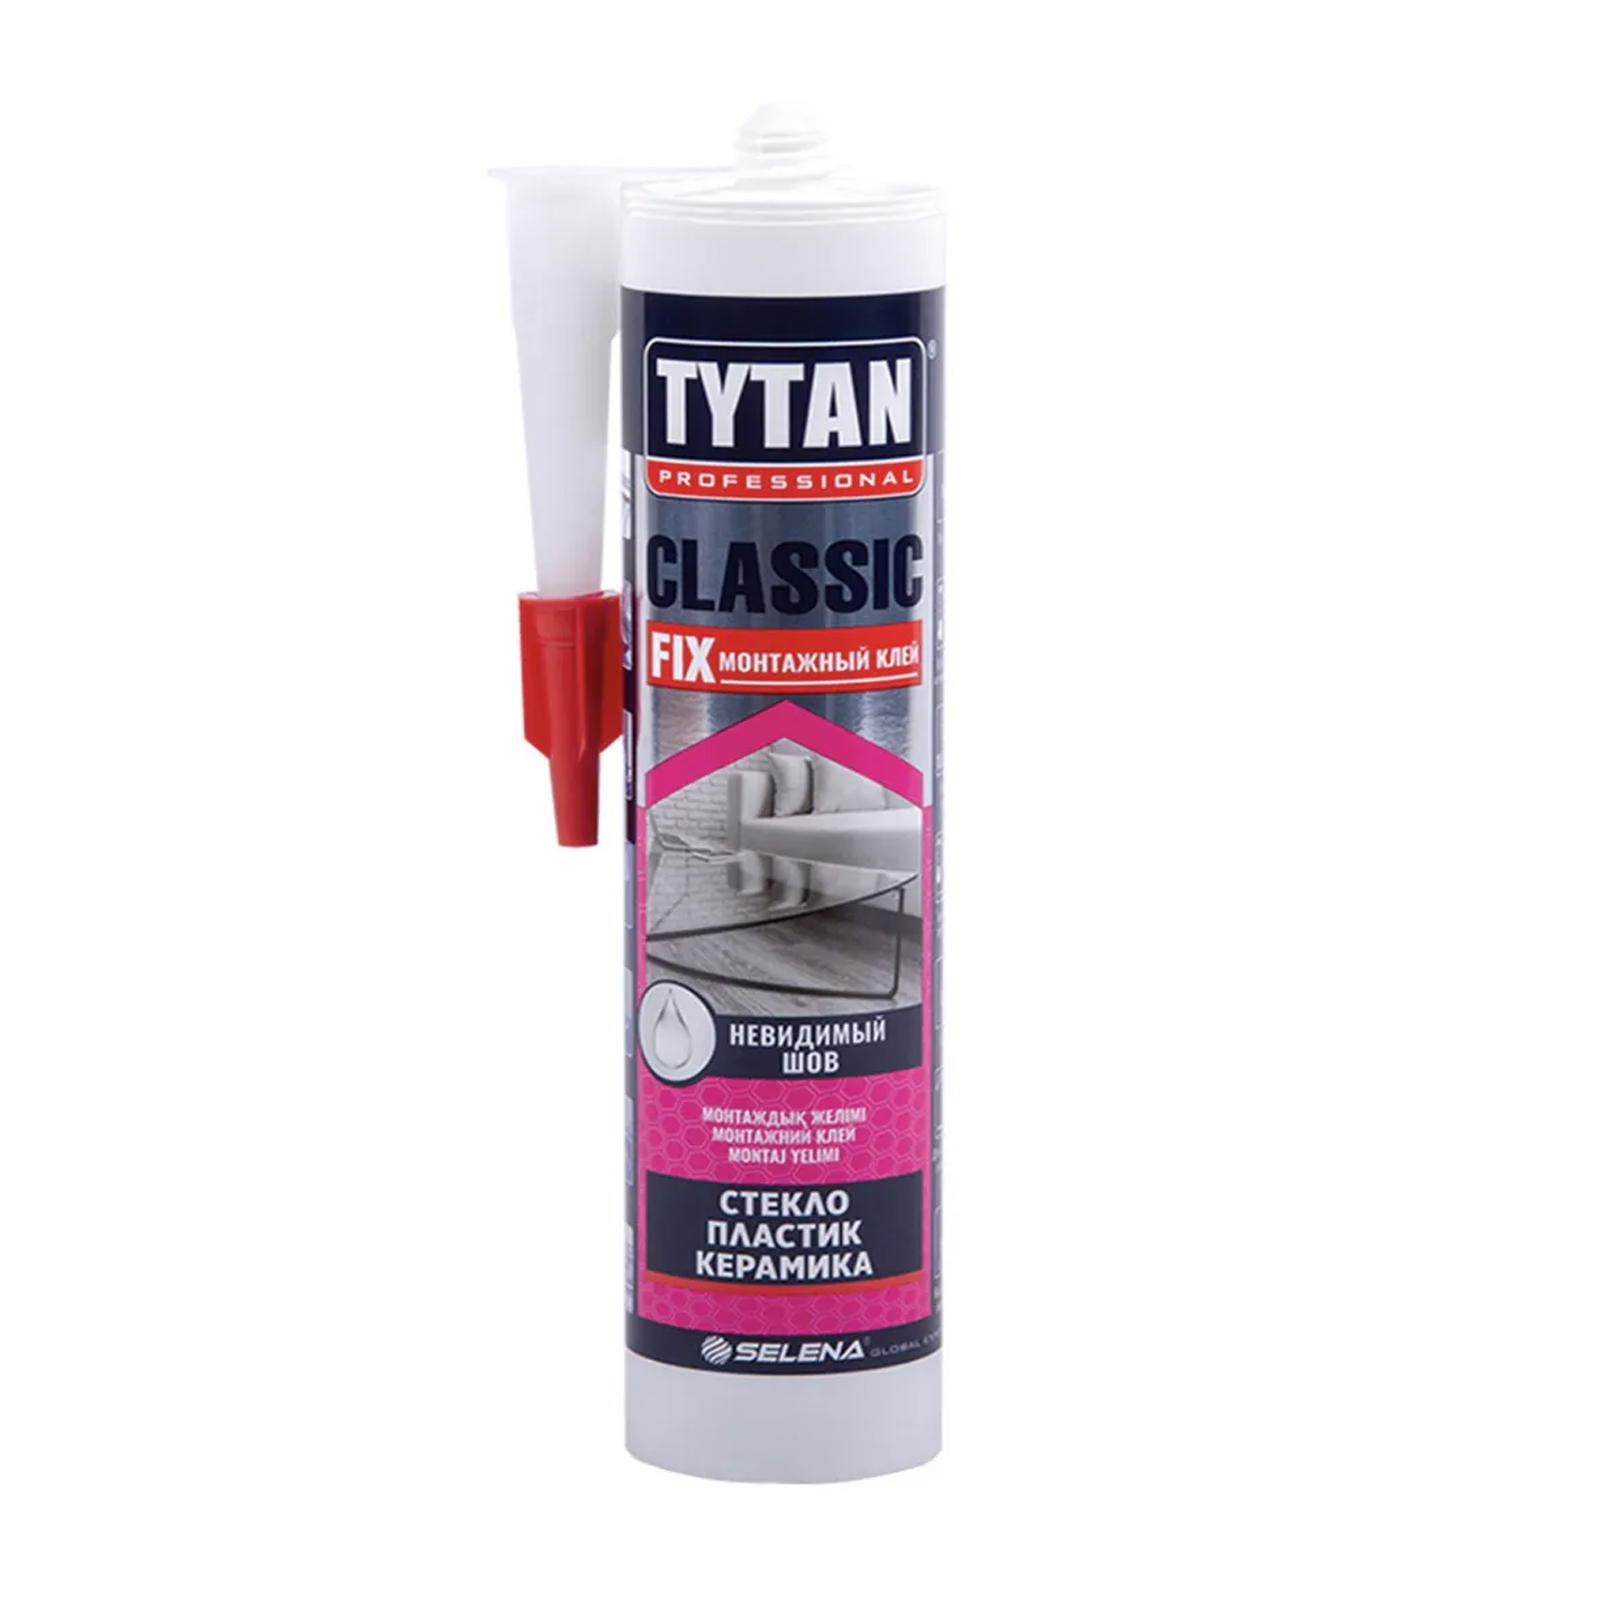 Tytan classic fix прозрачный. Клей монтажный Tytan Classic Fix 310 мл. Tytan Classic Fix монтажный клей. Жидкие гвозди Титан фикс прозрачный. Клей монтажный каучуковый Tytan Classic Fix прозрачный 310 мл.